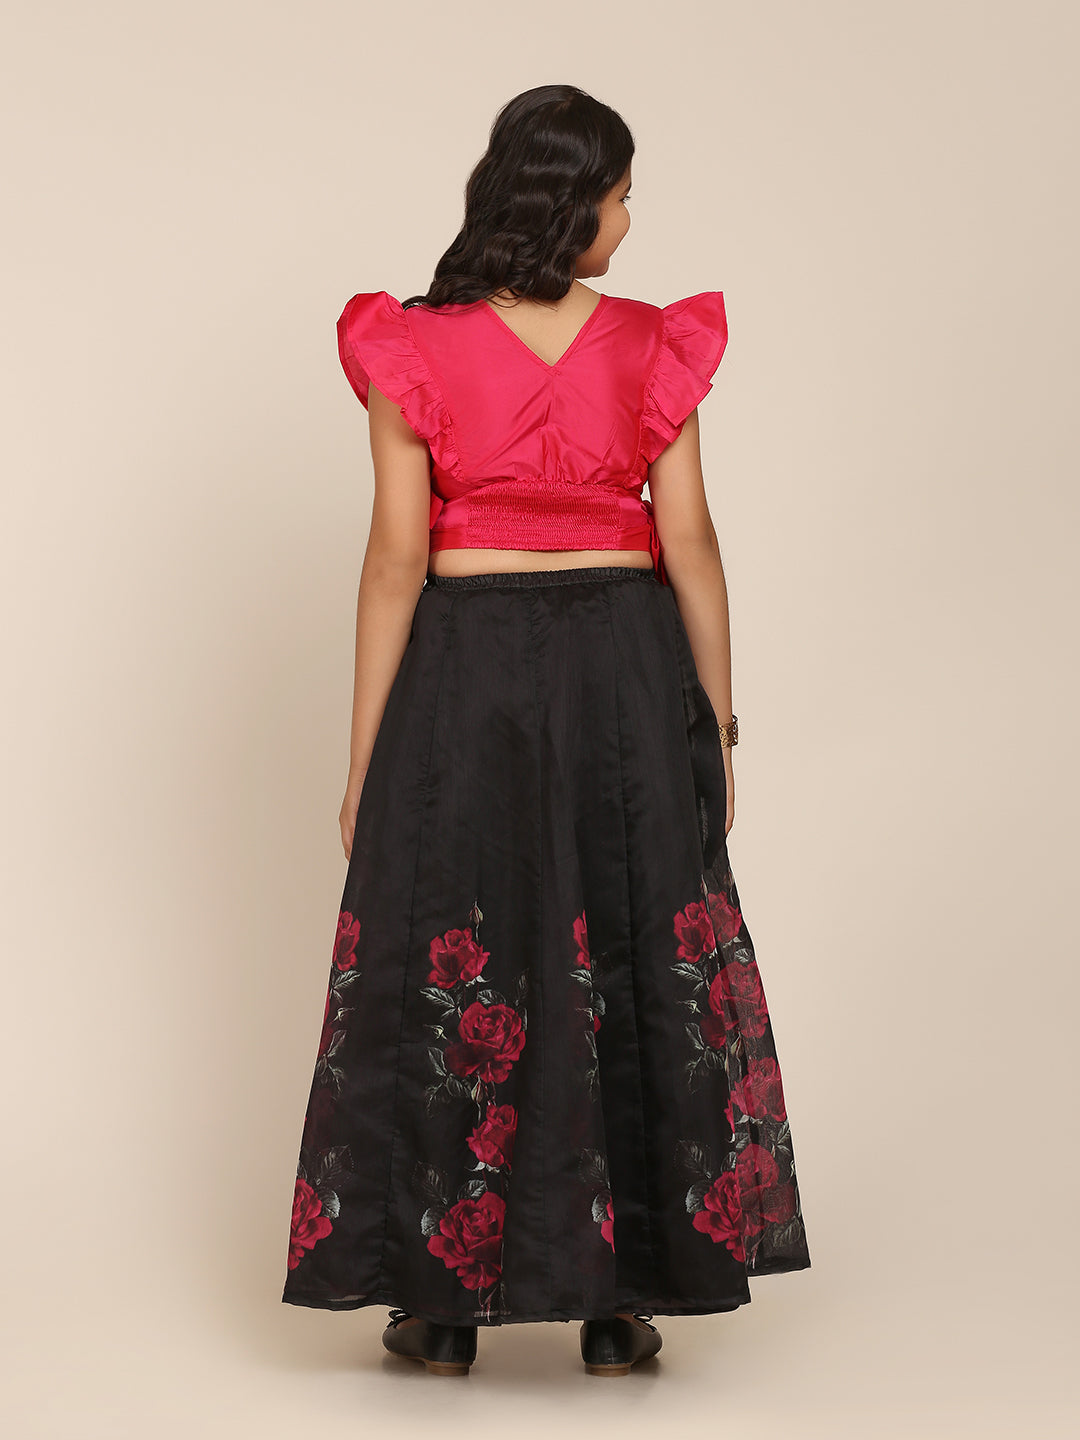 Bitiya By Bhama Girls Pink & Black Printed Ready To Wear Lehenga Choli